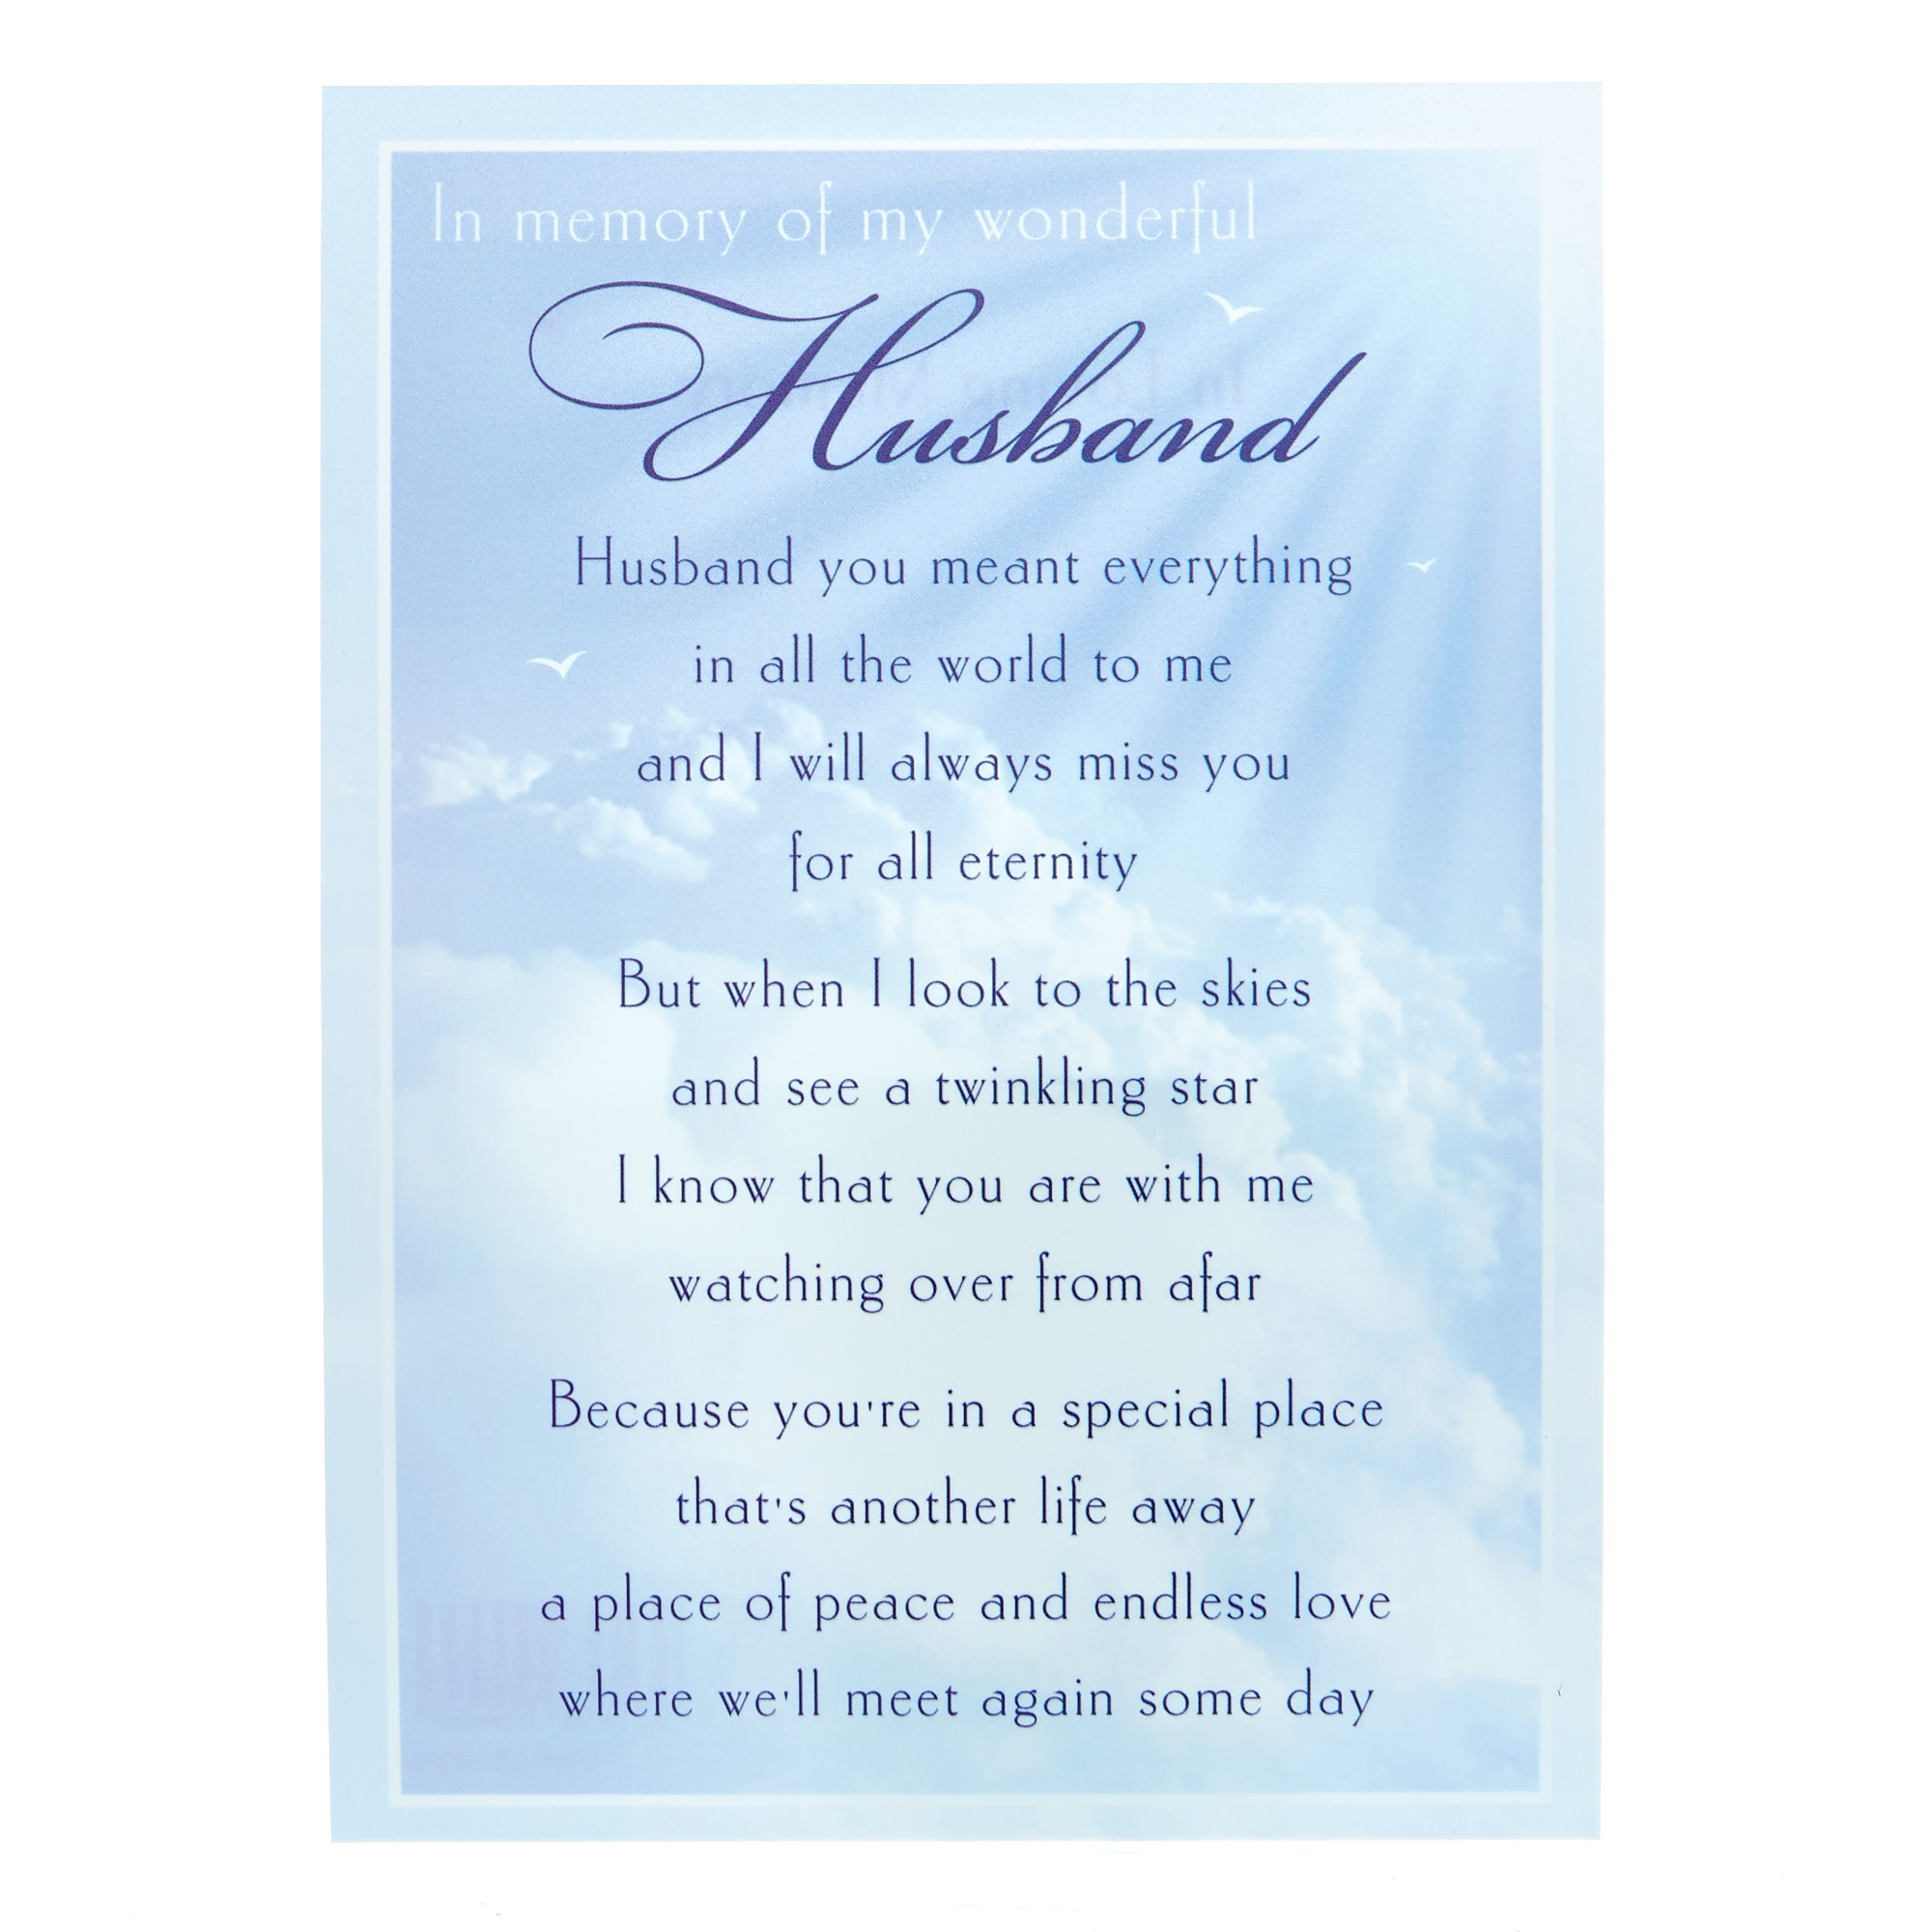 Love & Friendship Postcard - In Memory Of My Husband 